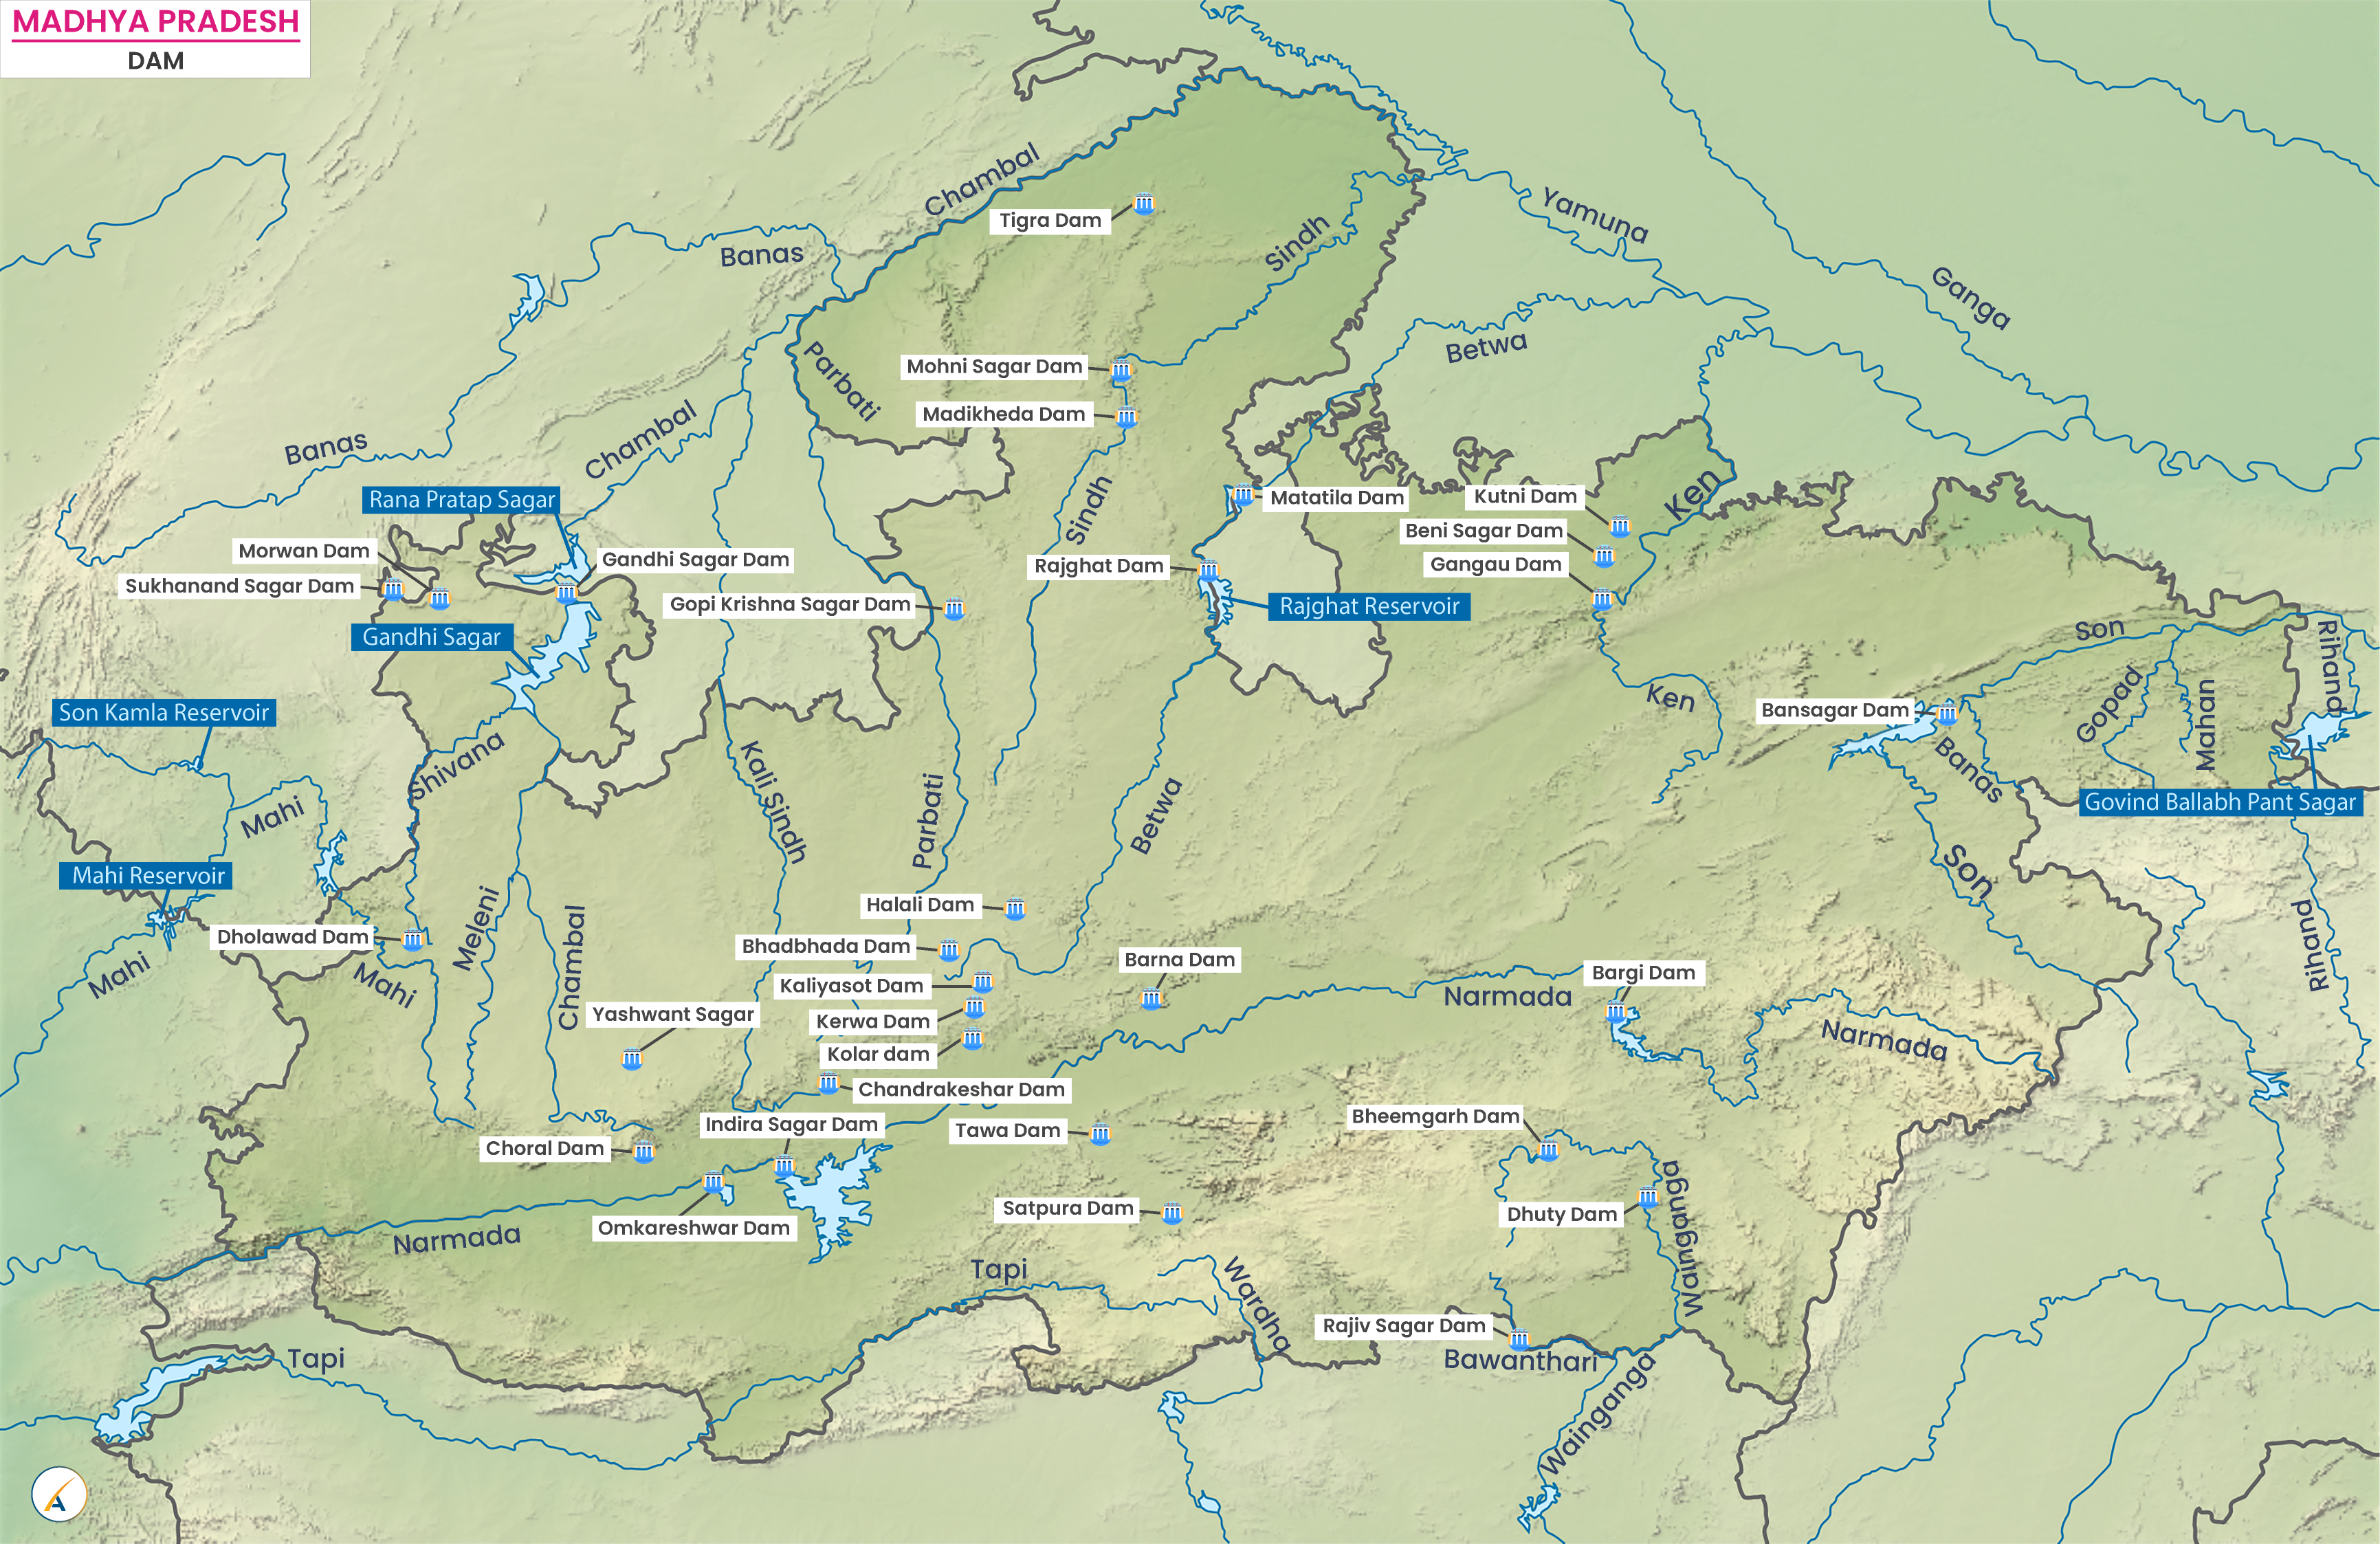 Major Dams in Madhya Pradesh (Map)